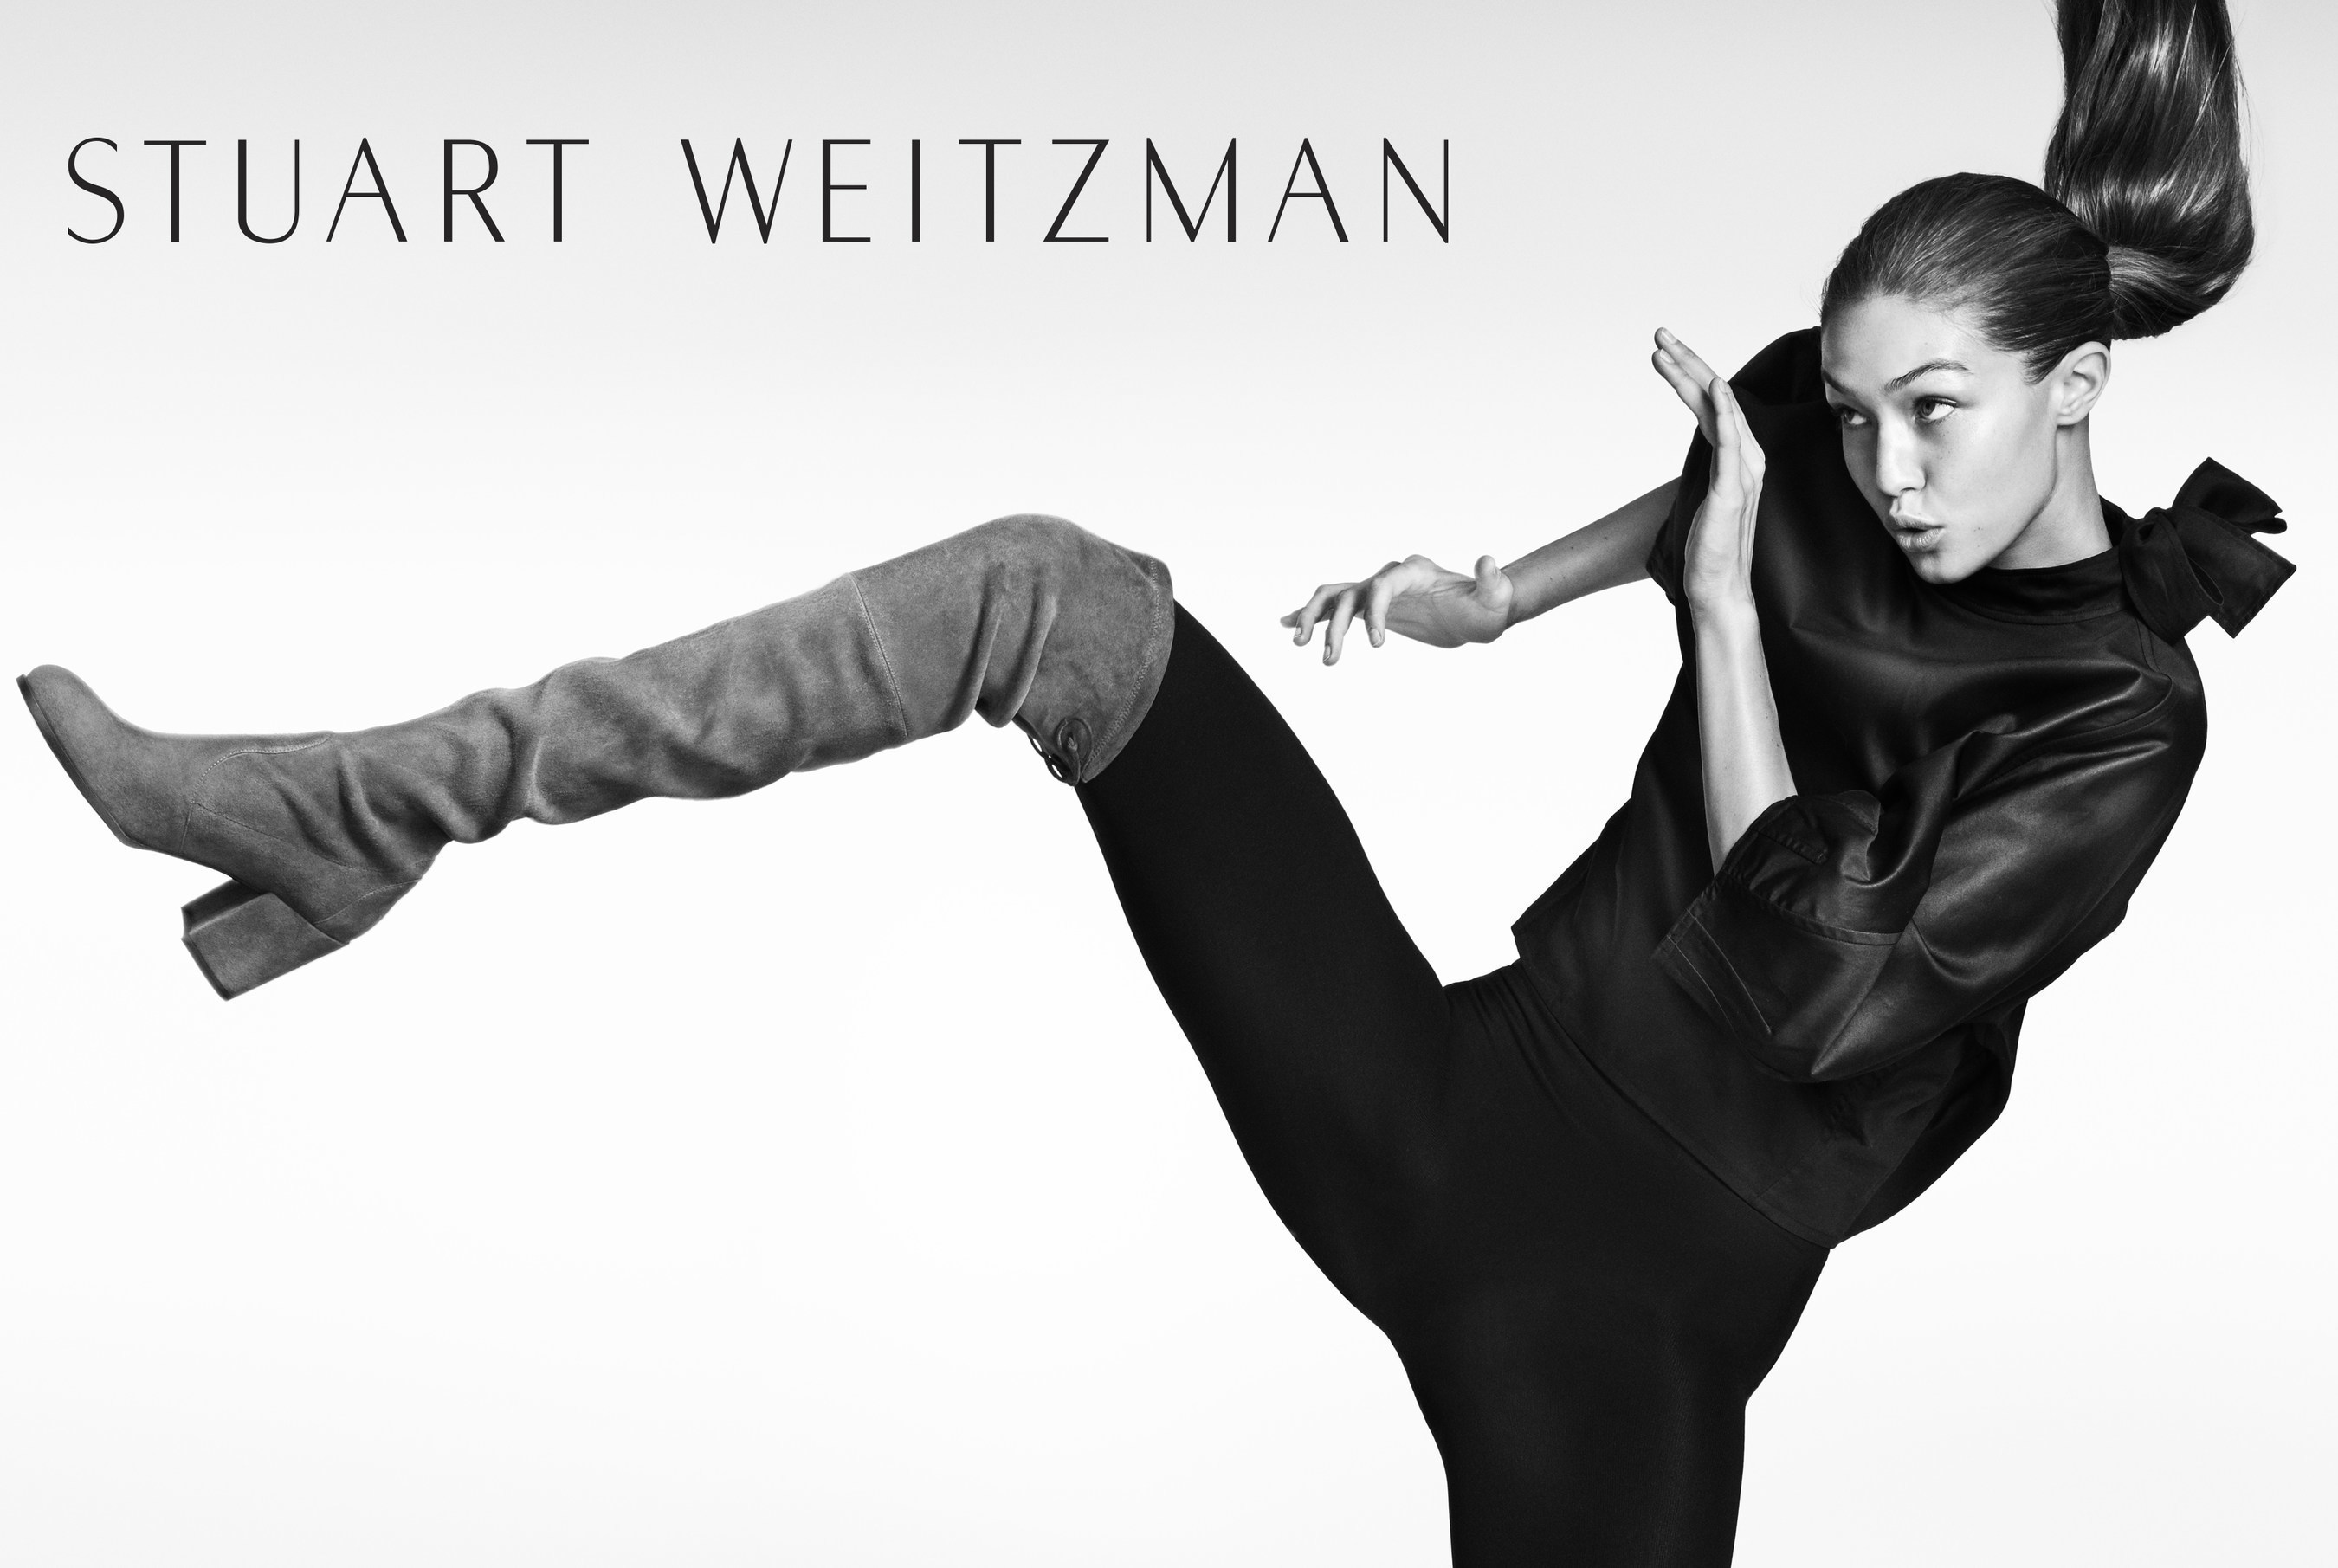 Stuart Weitzman Kick Starts Fall 2016 with a Campaign Starring Gigi Hadid